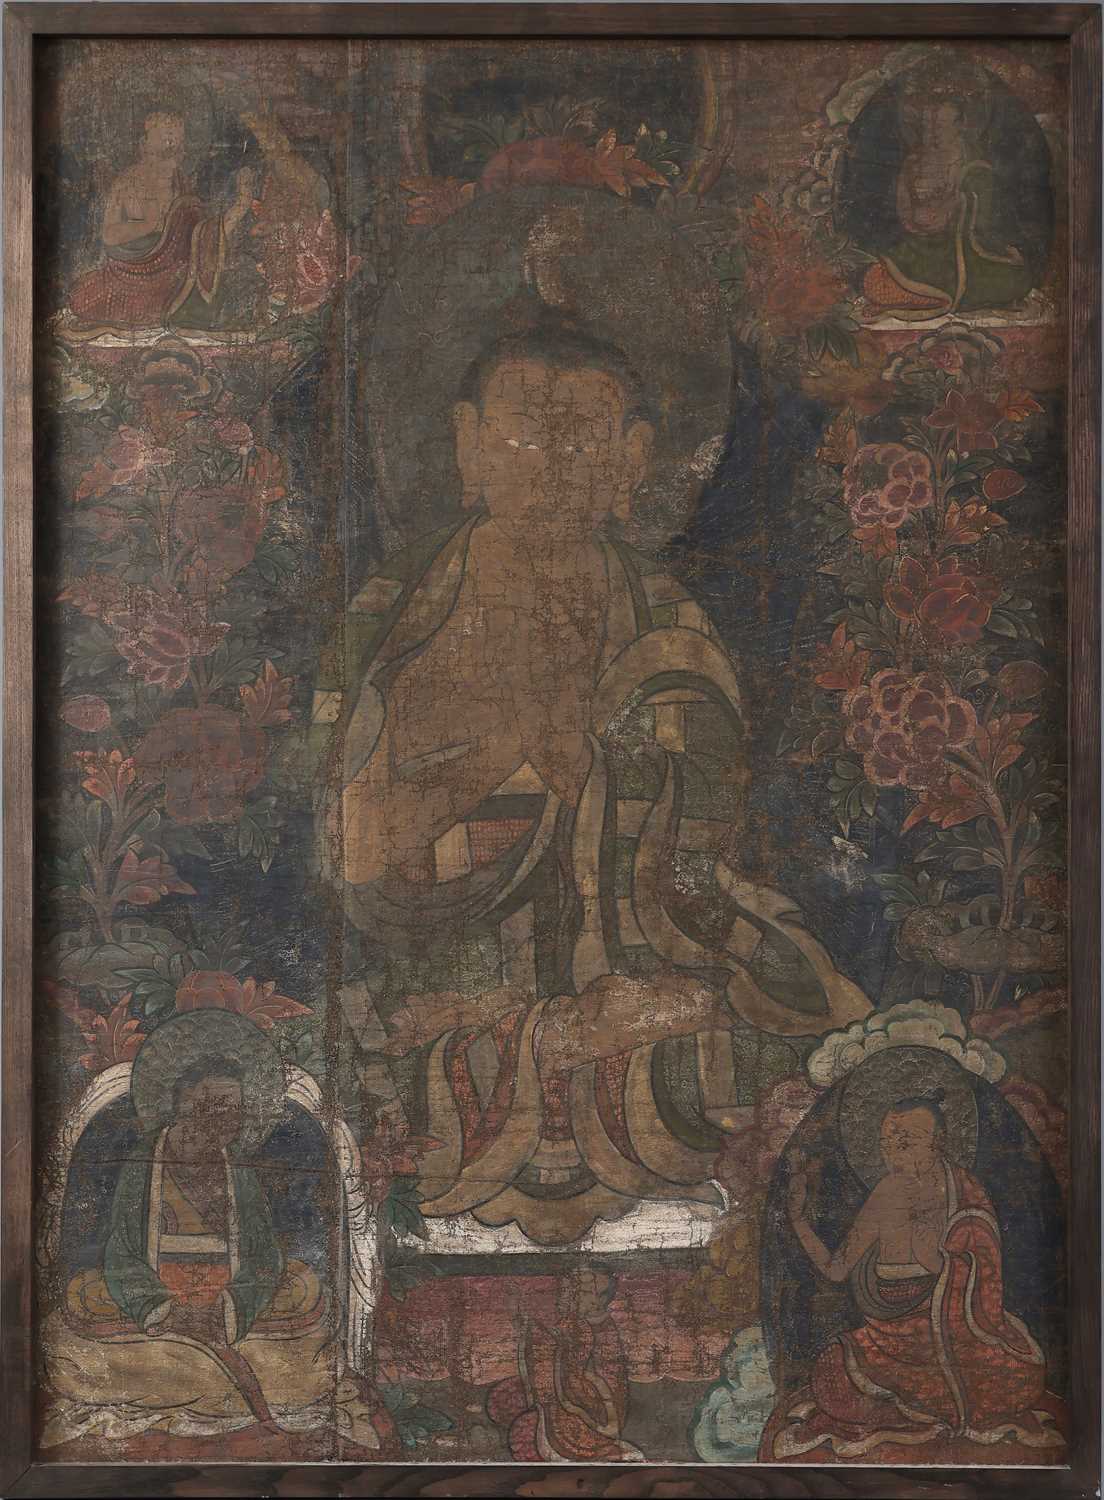 Lot 132 - Tibetischer Thangka "Buddha Amitabha"